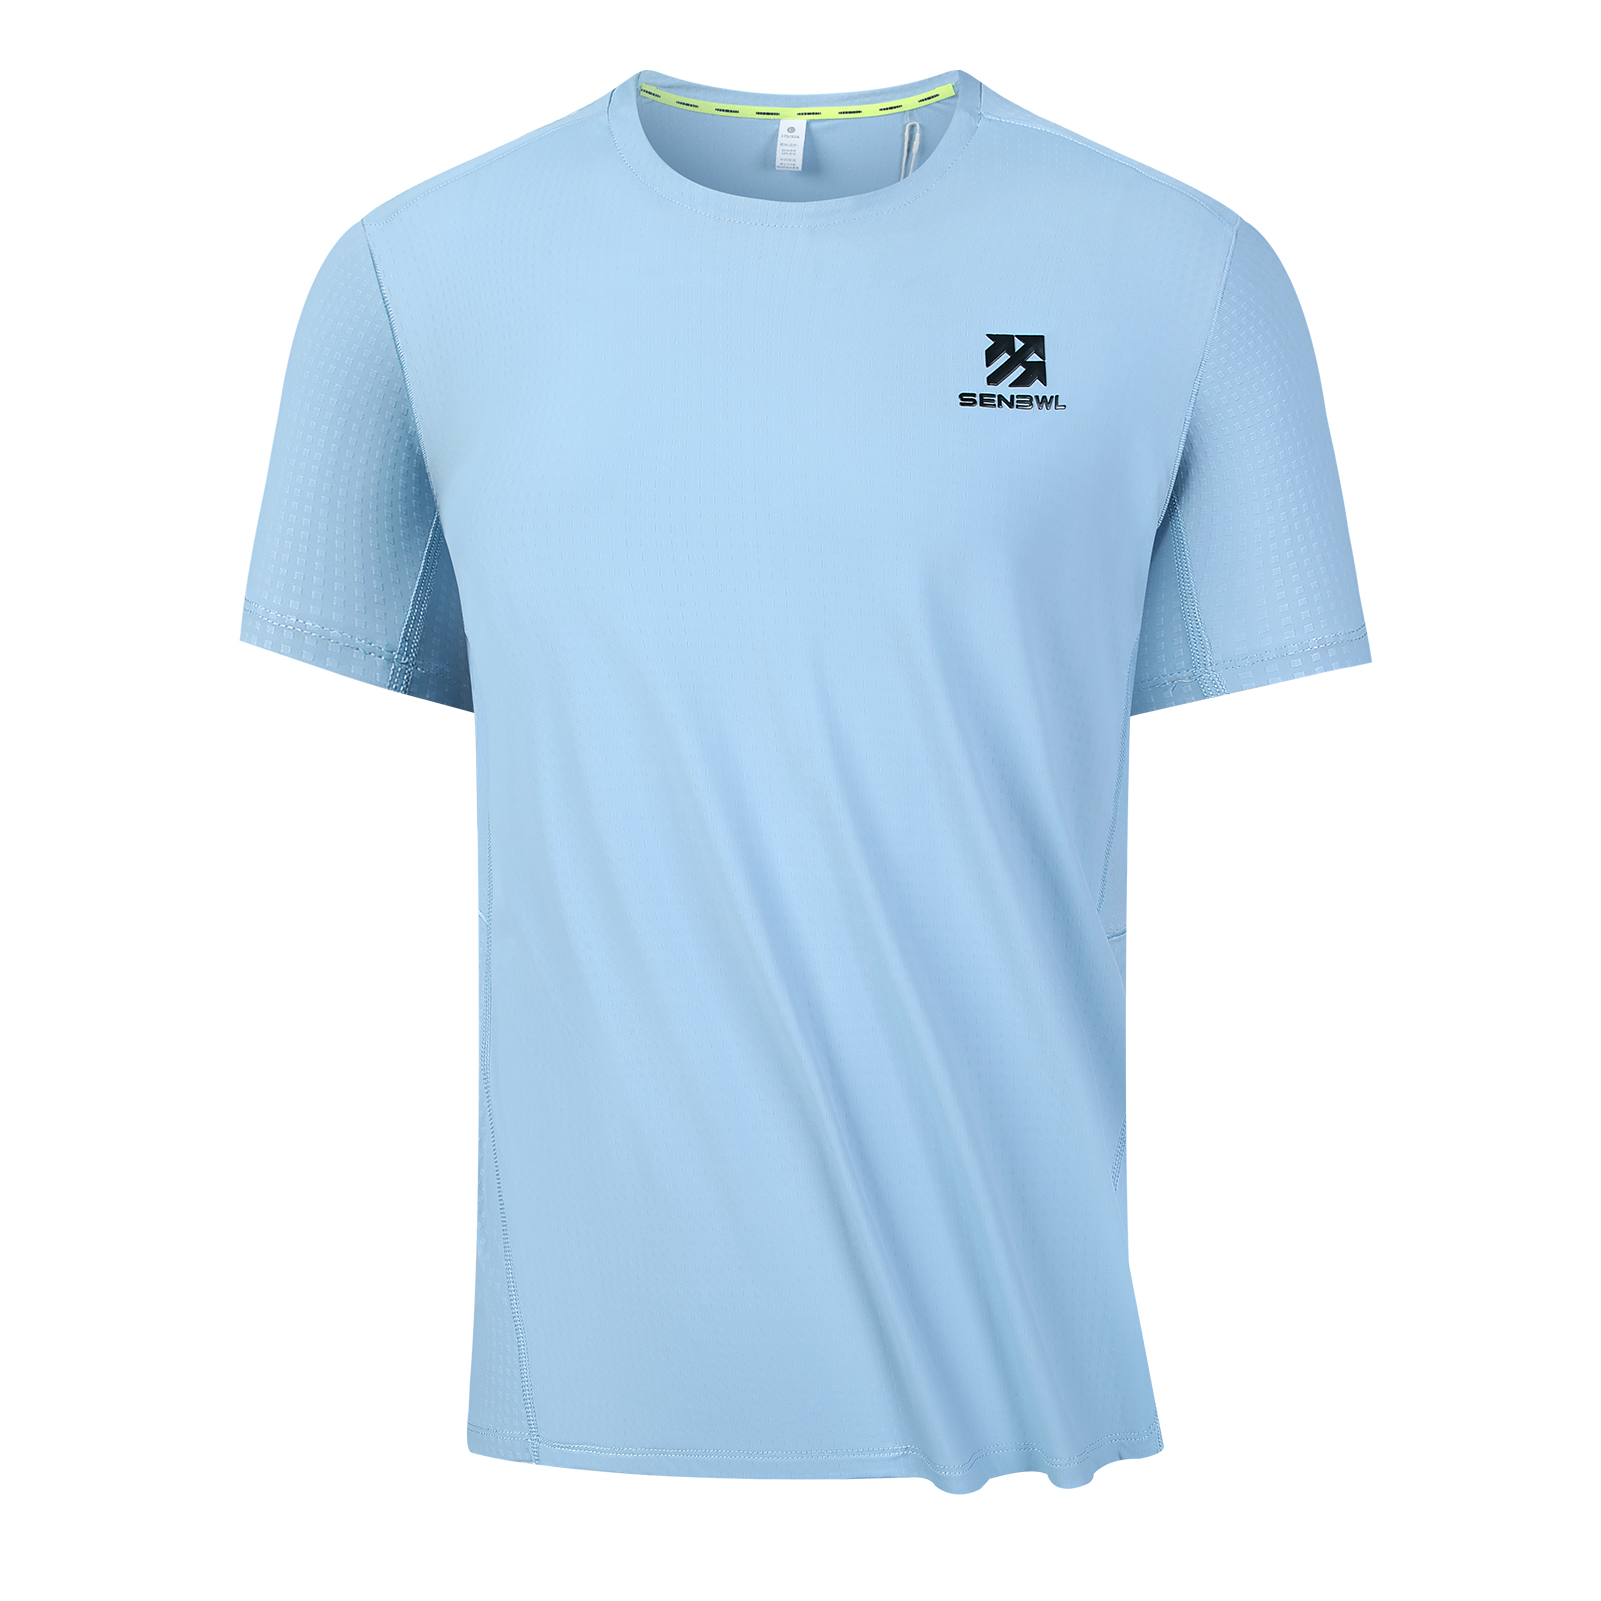 Senbwl Men's UPF 50+ Protection Anti-UV Technical T-Shirt-Senbwl Sports